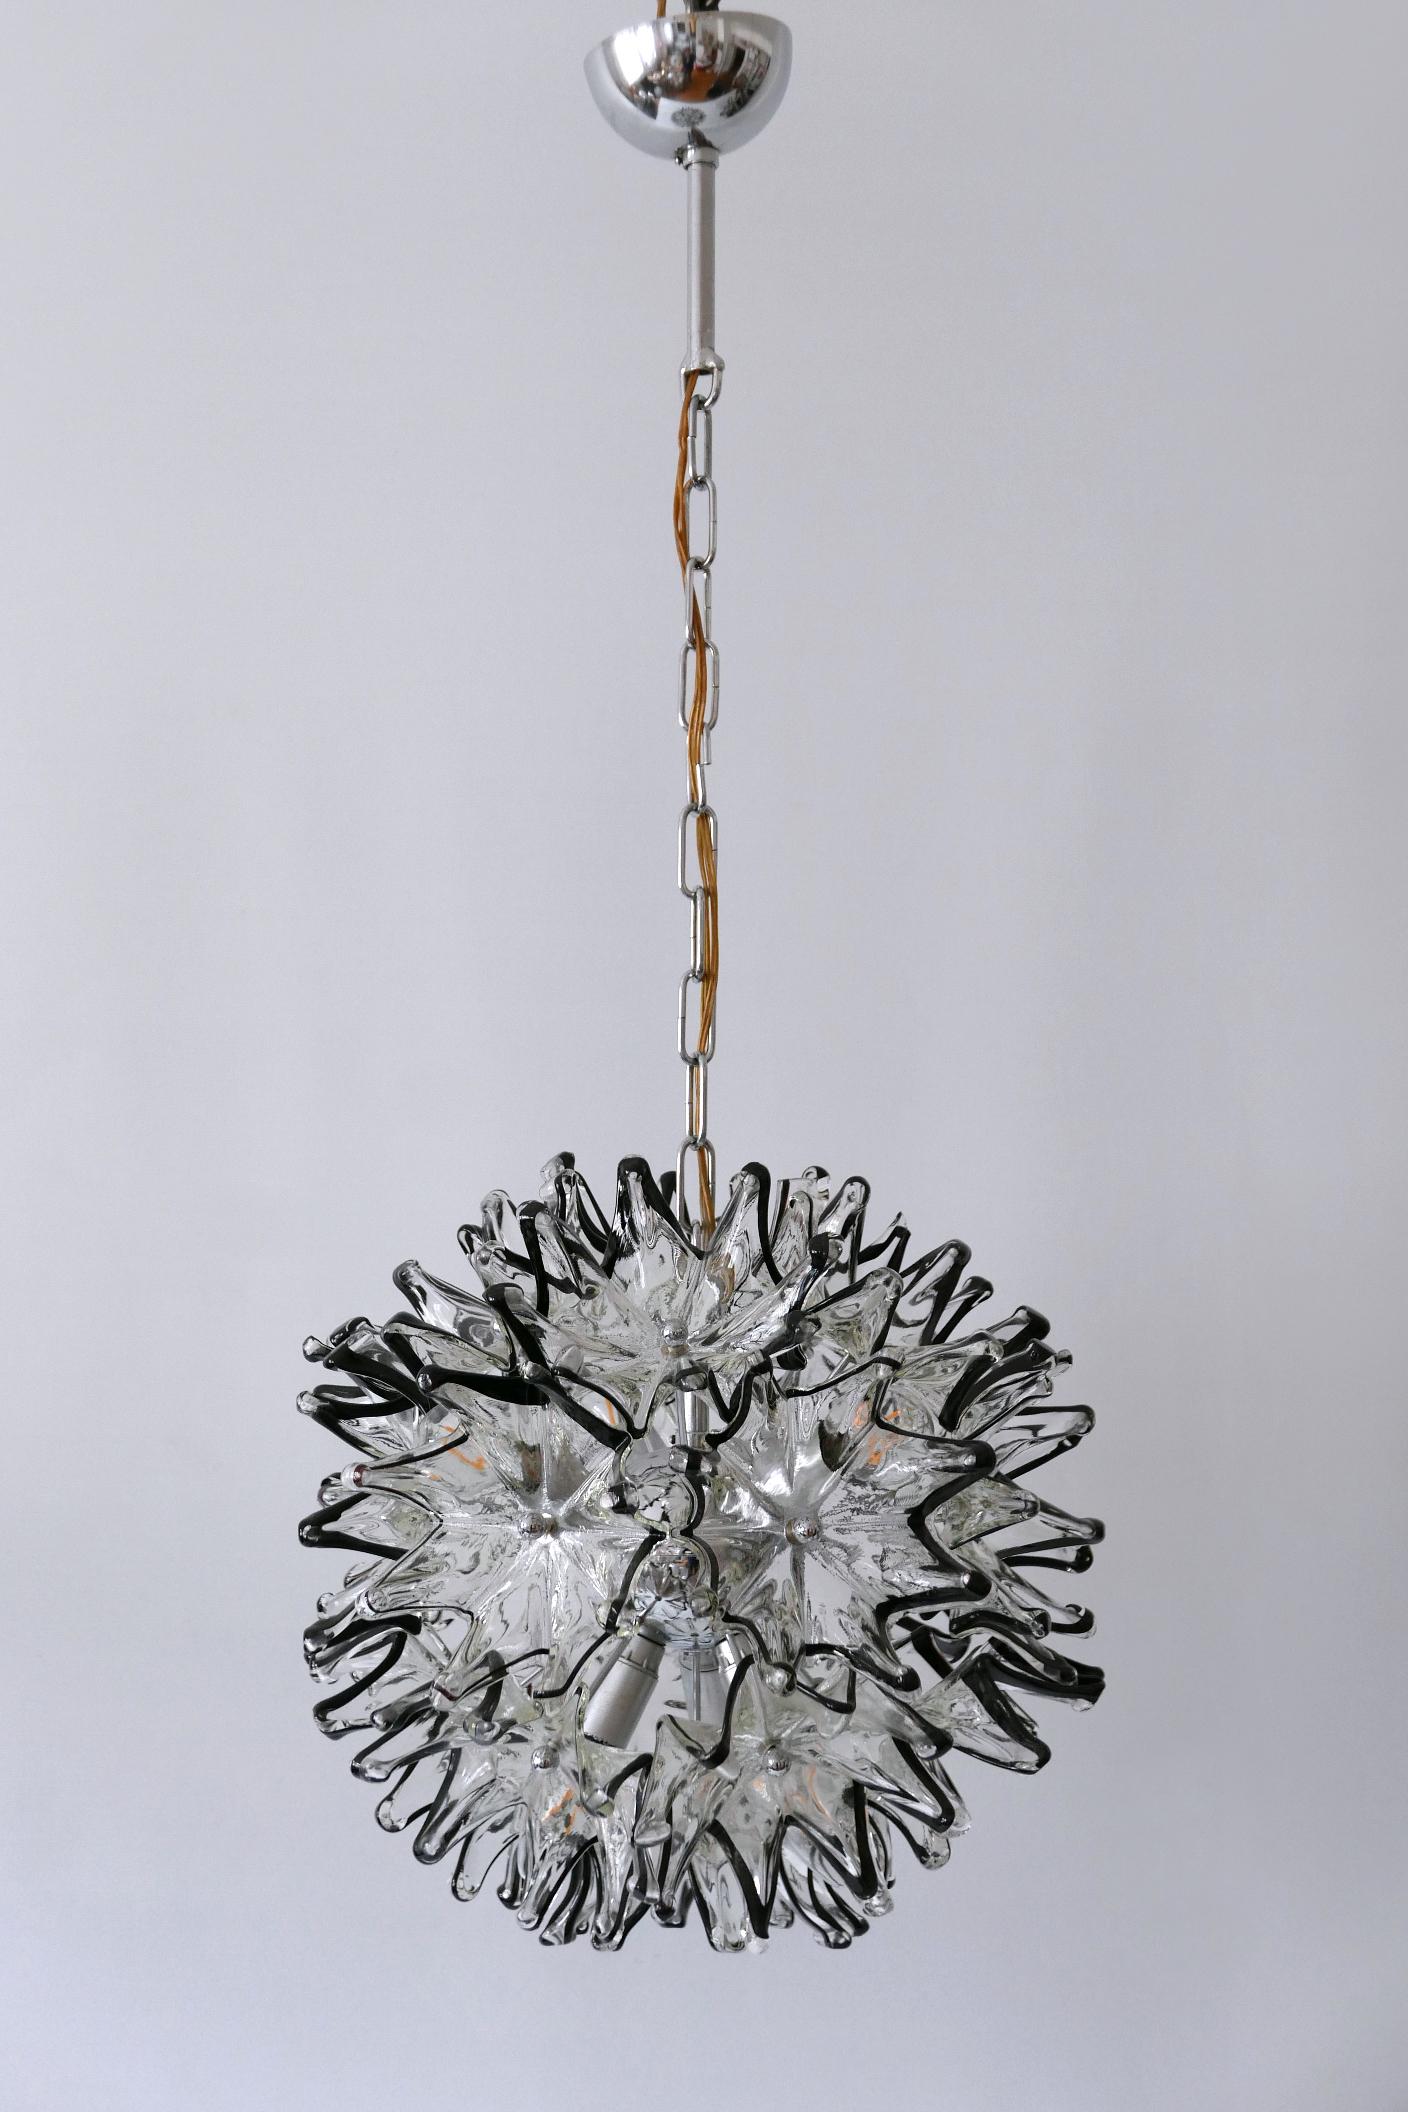 Italian Mid-Century Modern 6-Flamed Chandelier or Pendant Lamp Dandelion 1960s Italy For Sale